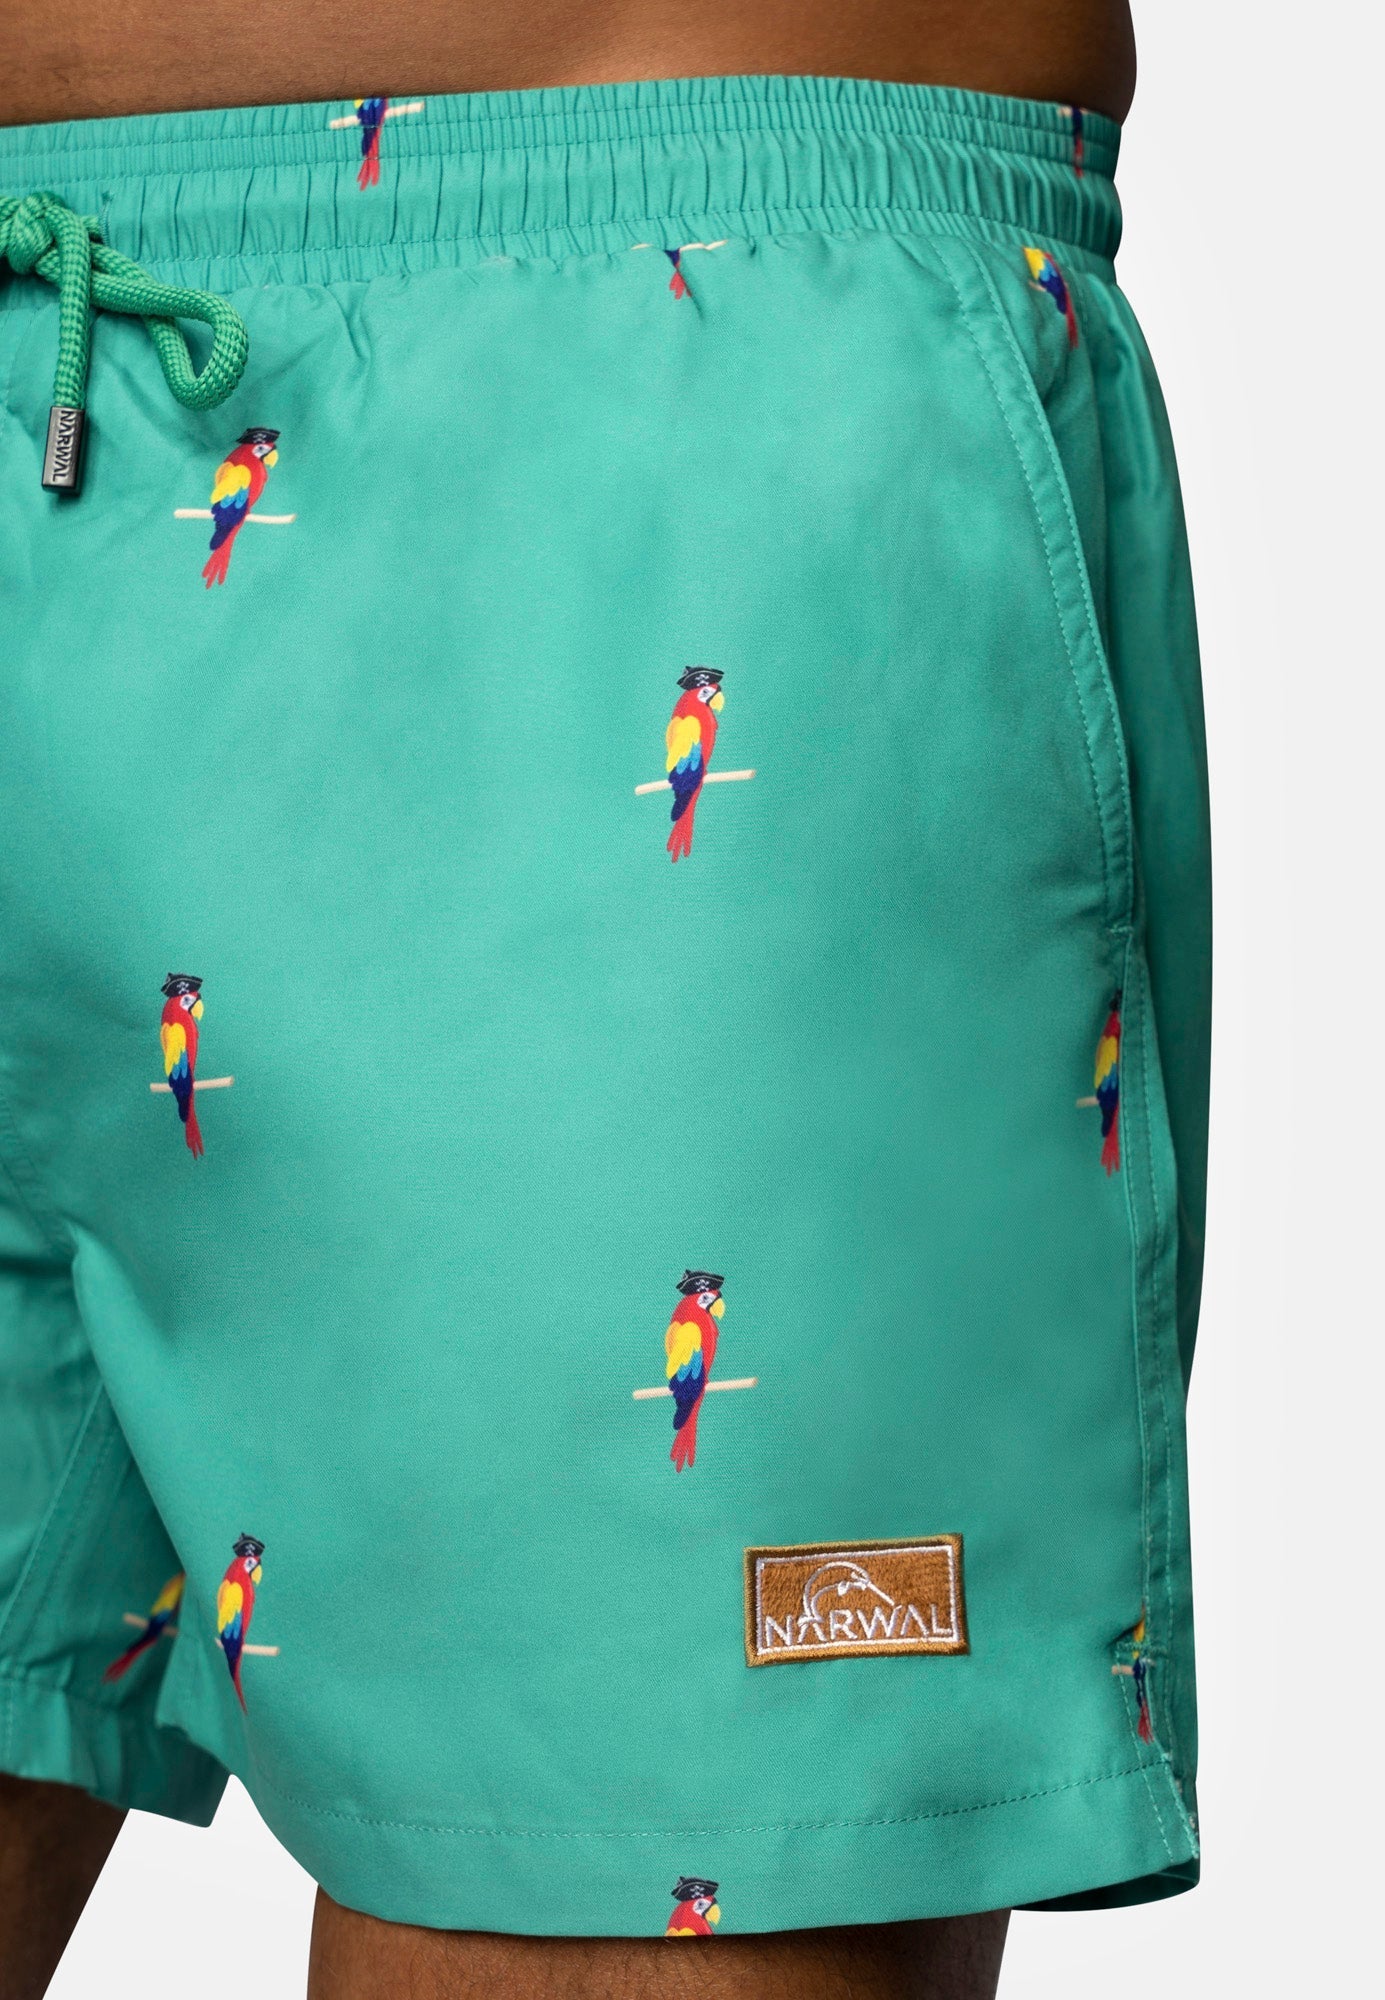 Parrot Swim Trunks & T-shirt Bundle